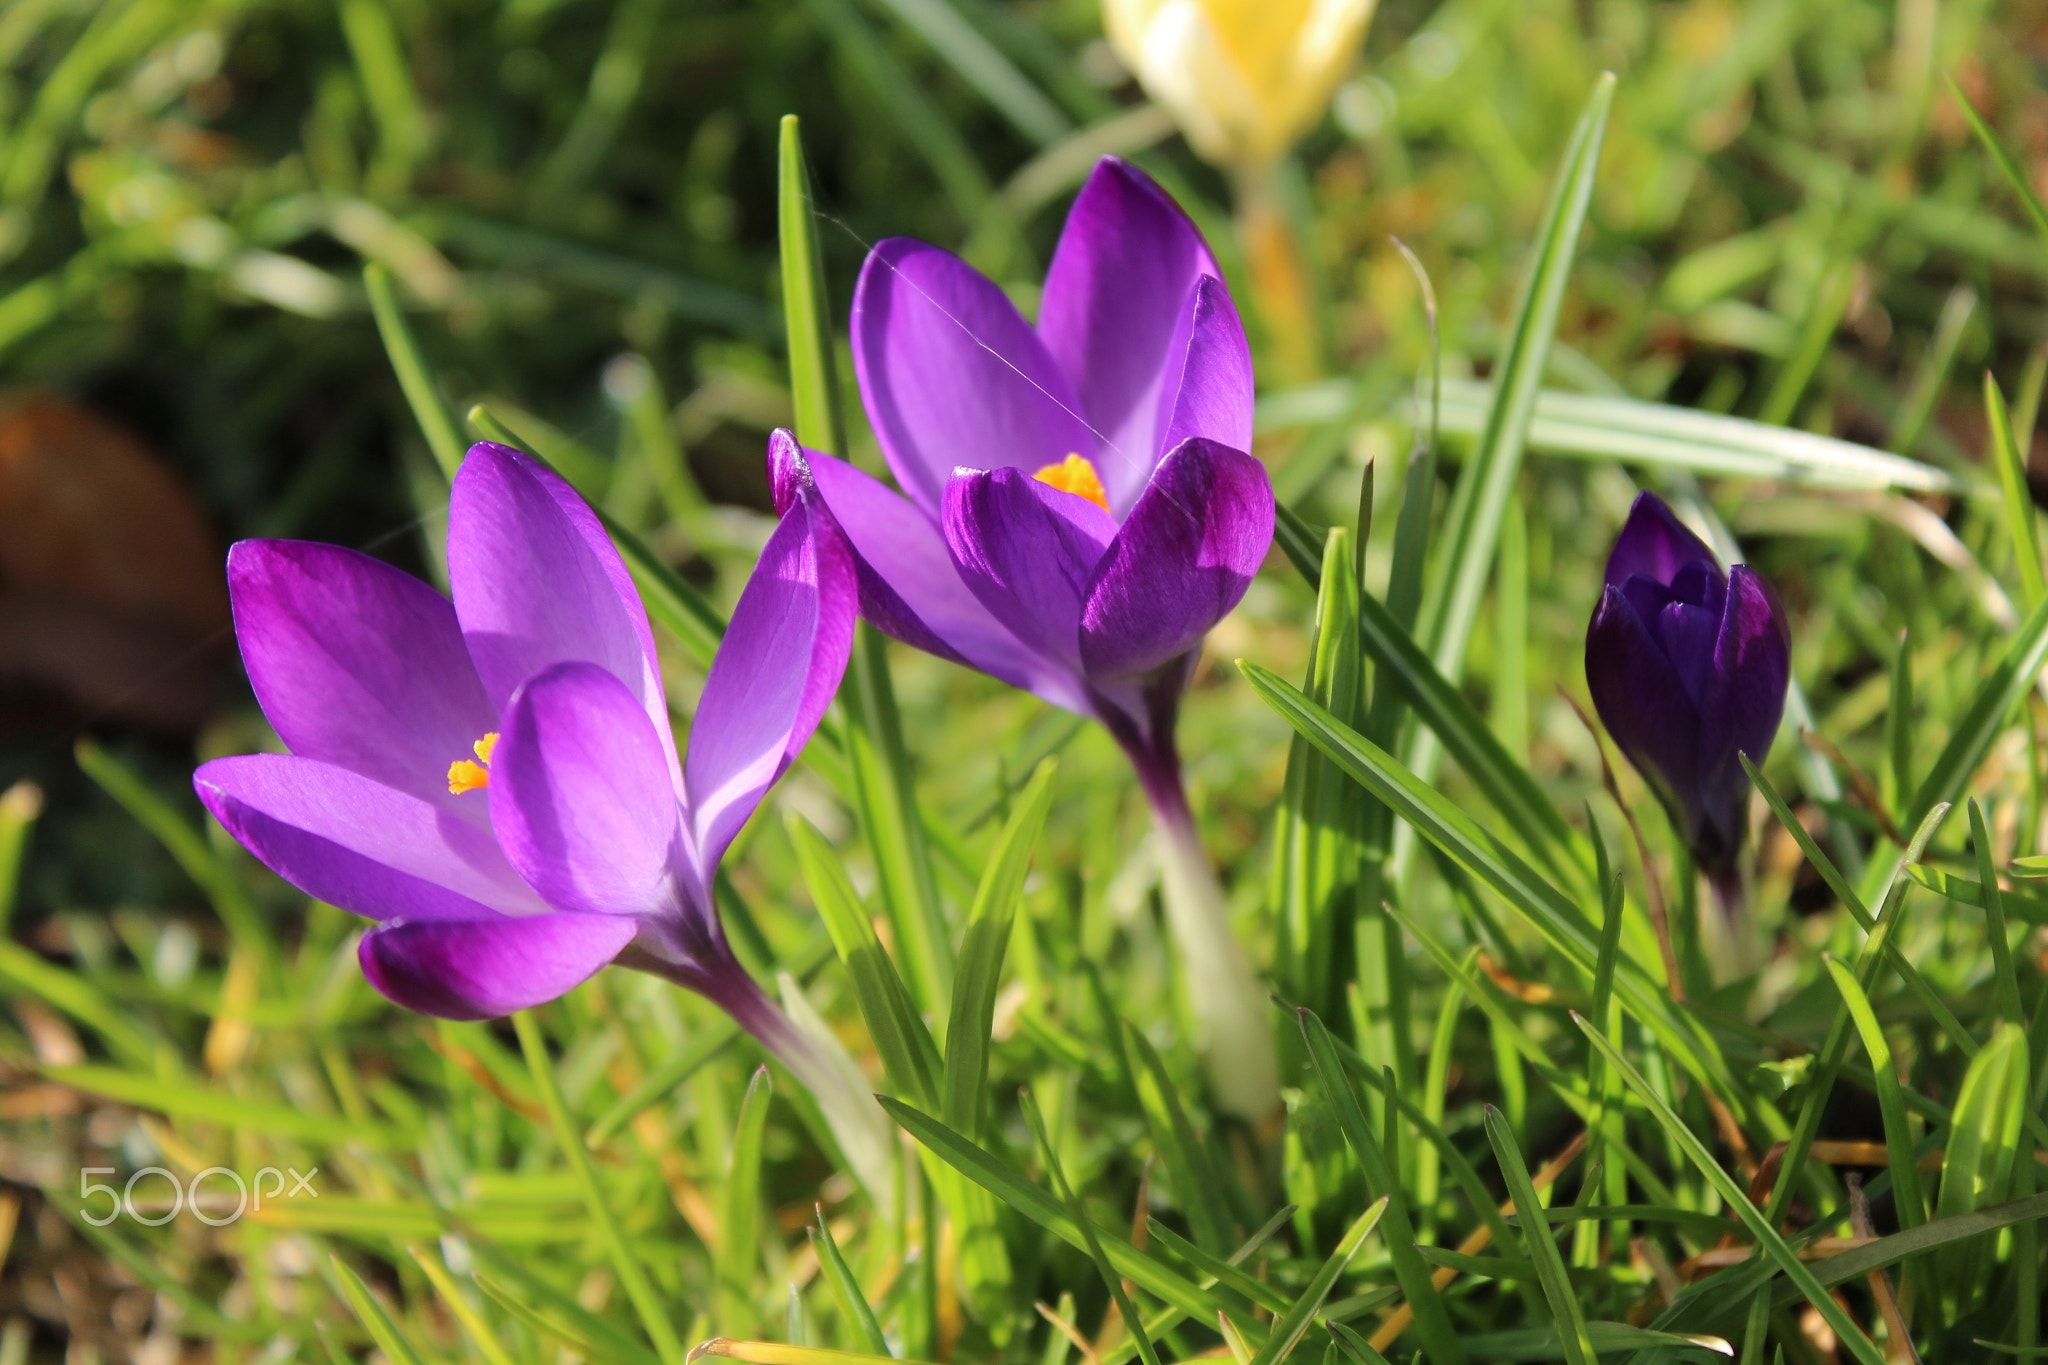 Blurred spring - Purple crocuses. One yellow crocus in the ...